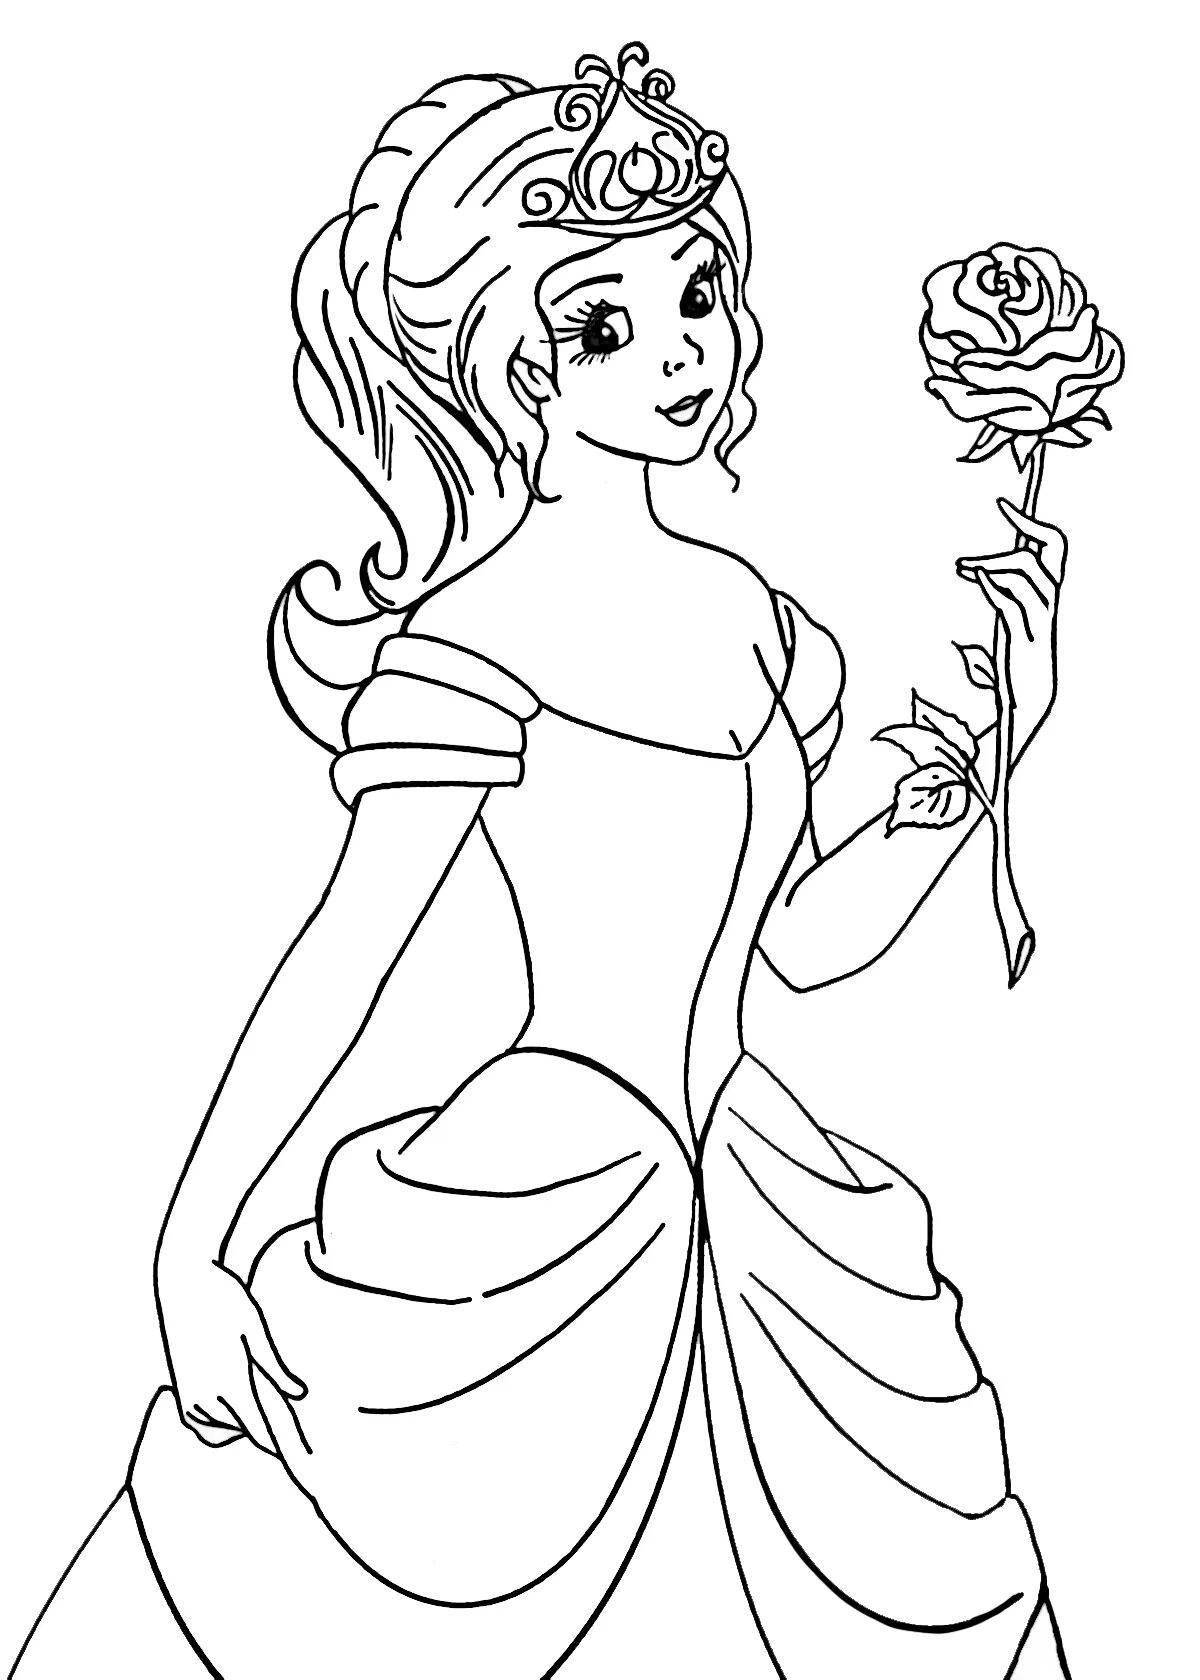 Adorable princess coloring page